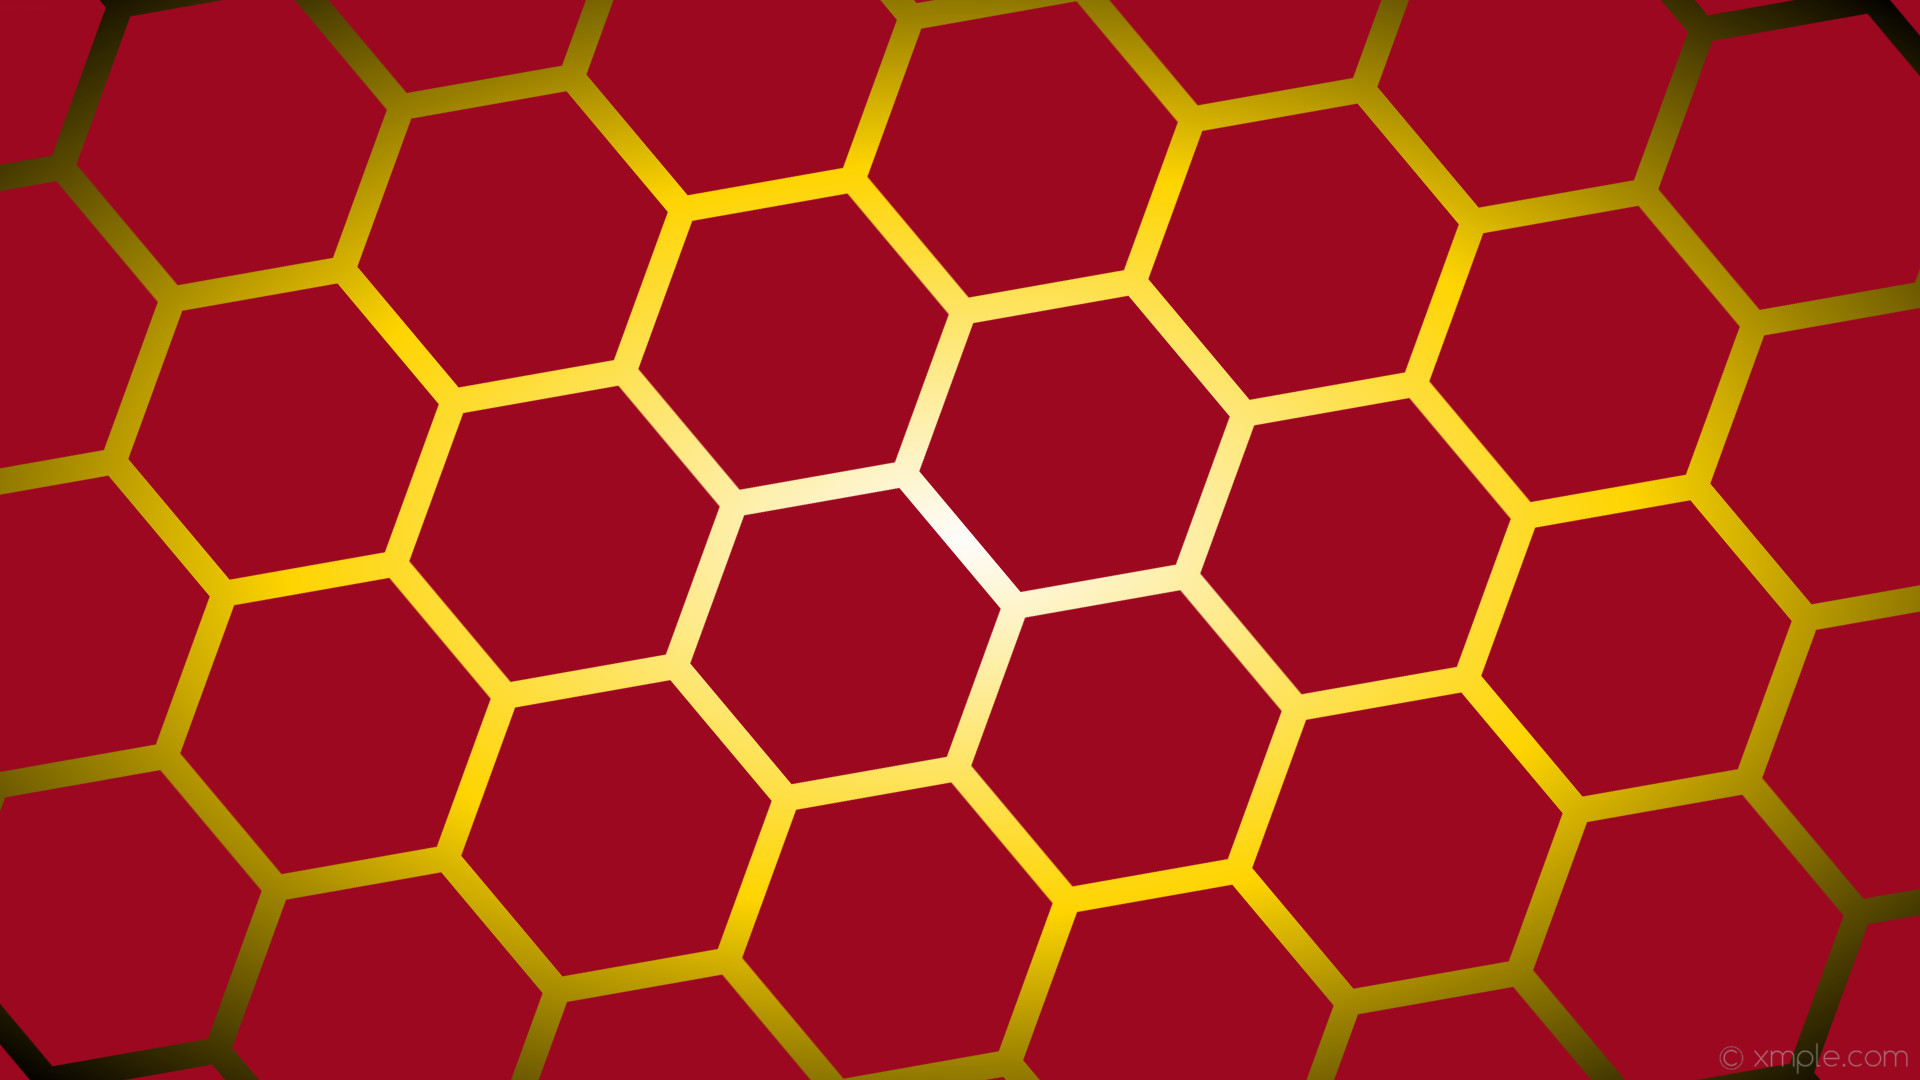 1920x1080 wallpaper yellow glow black red gradient hexagon white gold #9b0820 #ffffff  #ffd700 diagonal